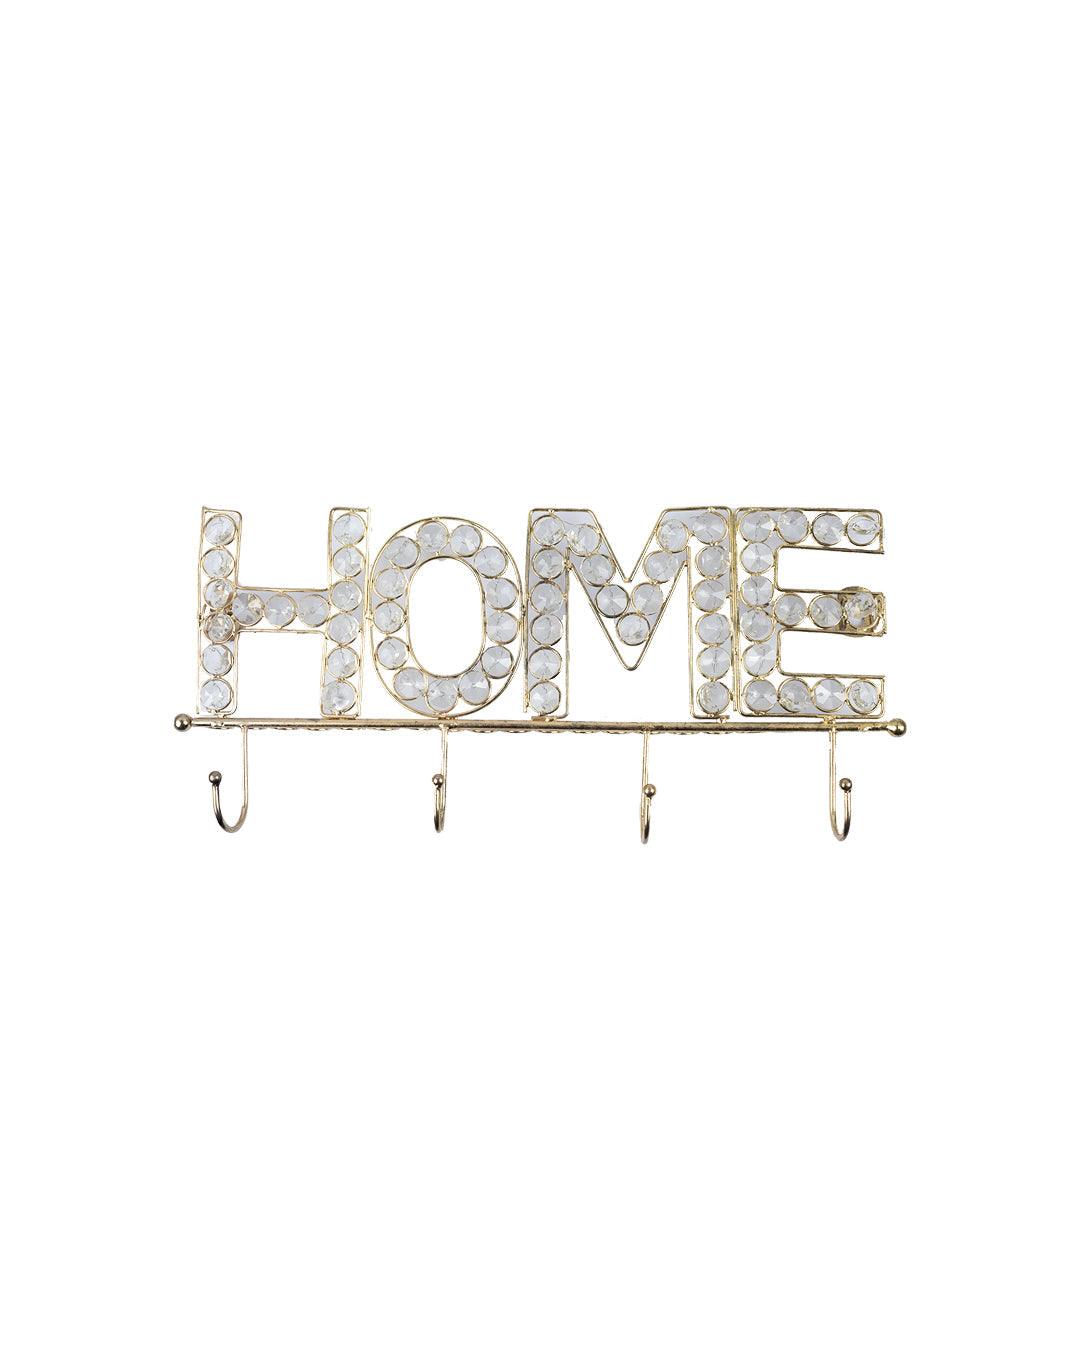 VON CASA "HOME Sign" Silver Crystal Wall Mounted Décor Hook, 4 Hooks, Golden, Iron - VON CASA